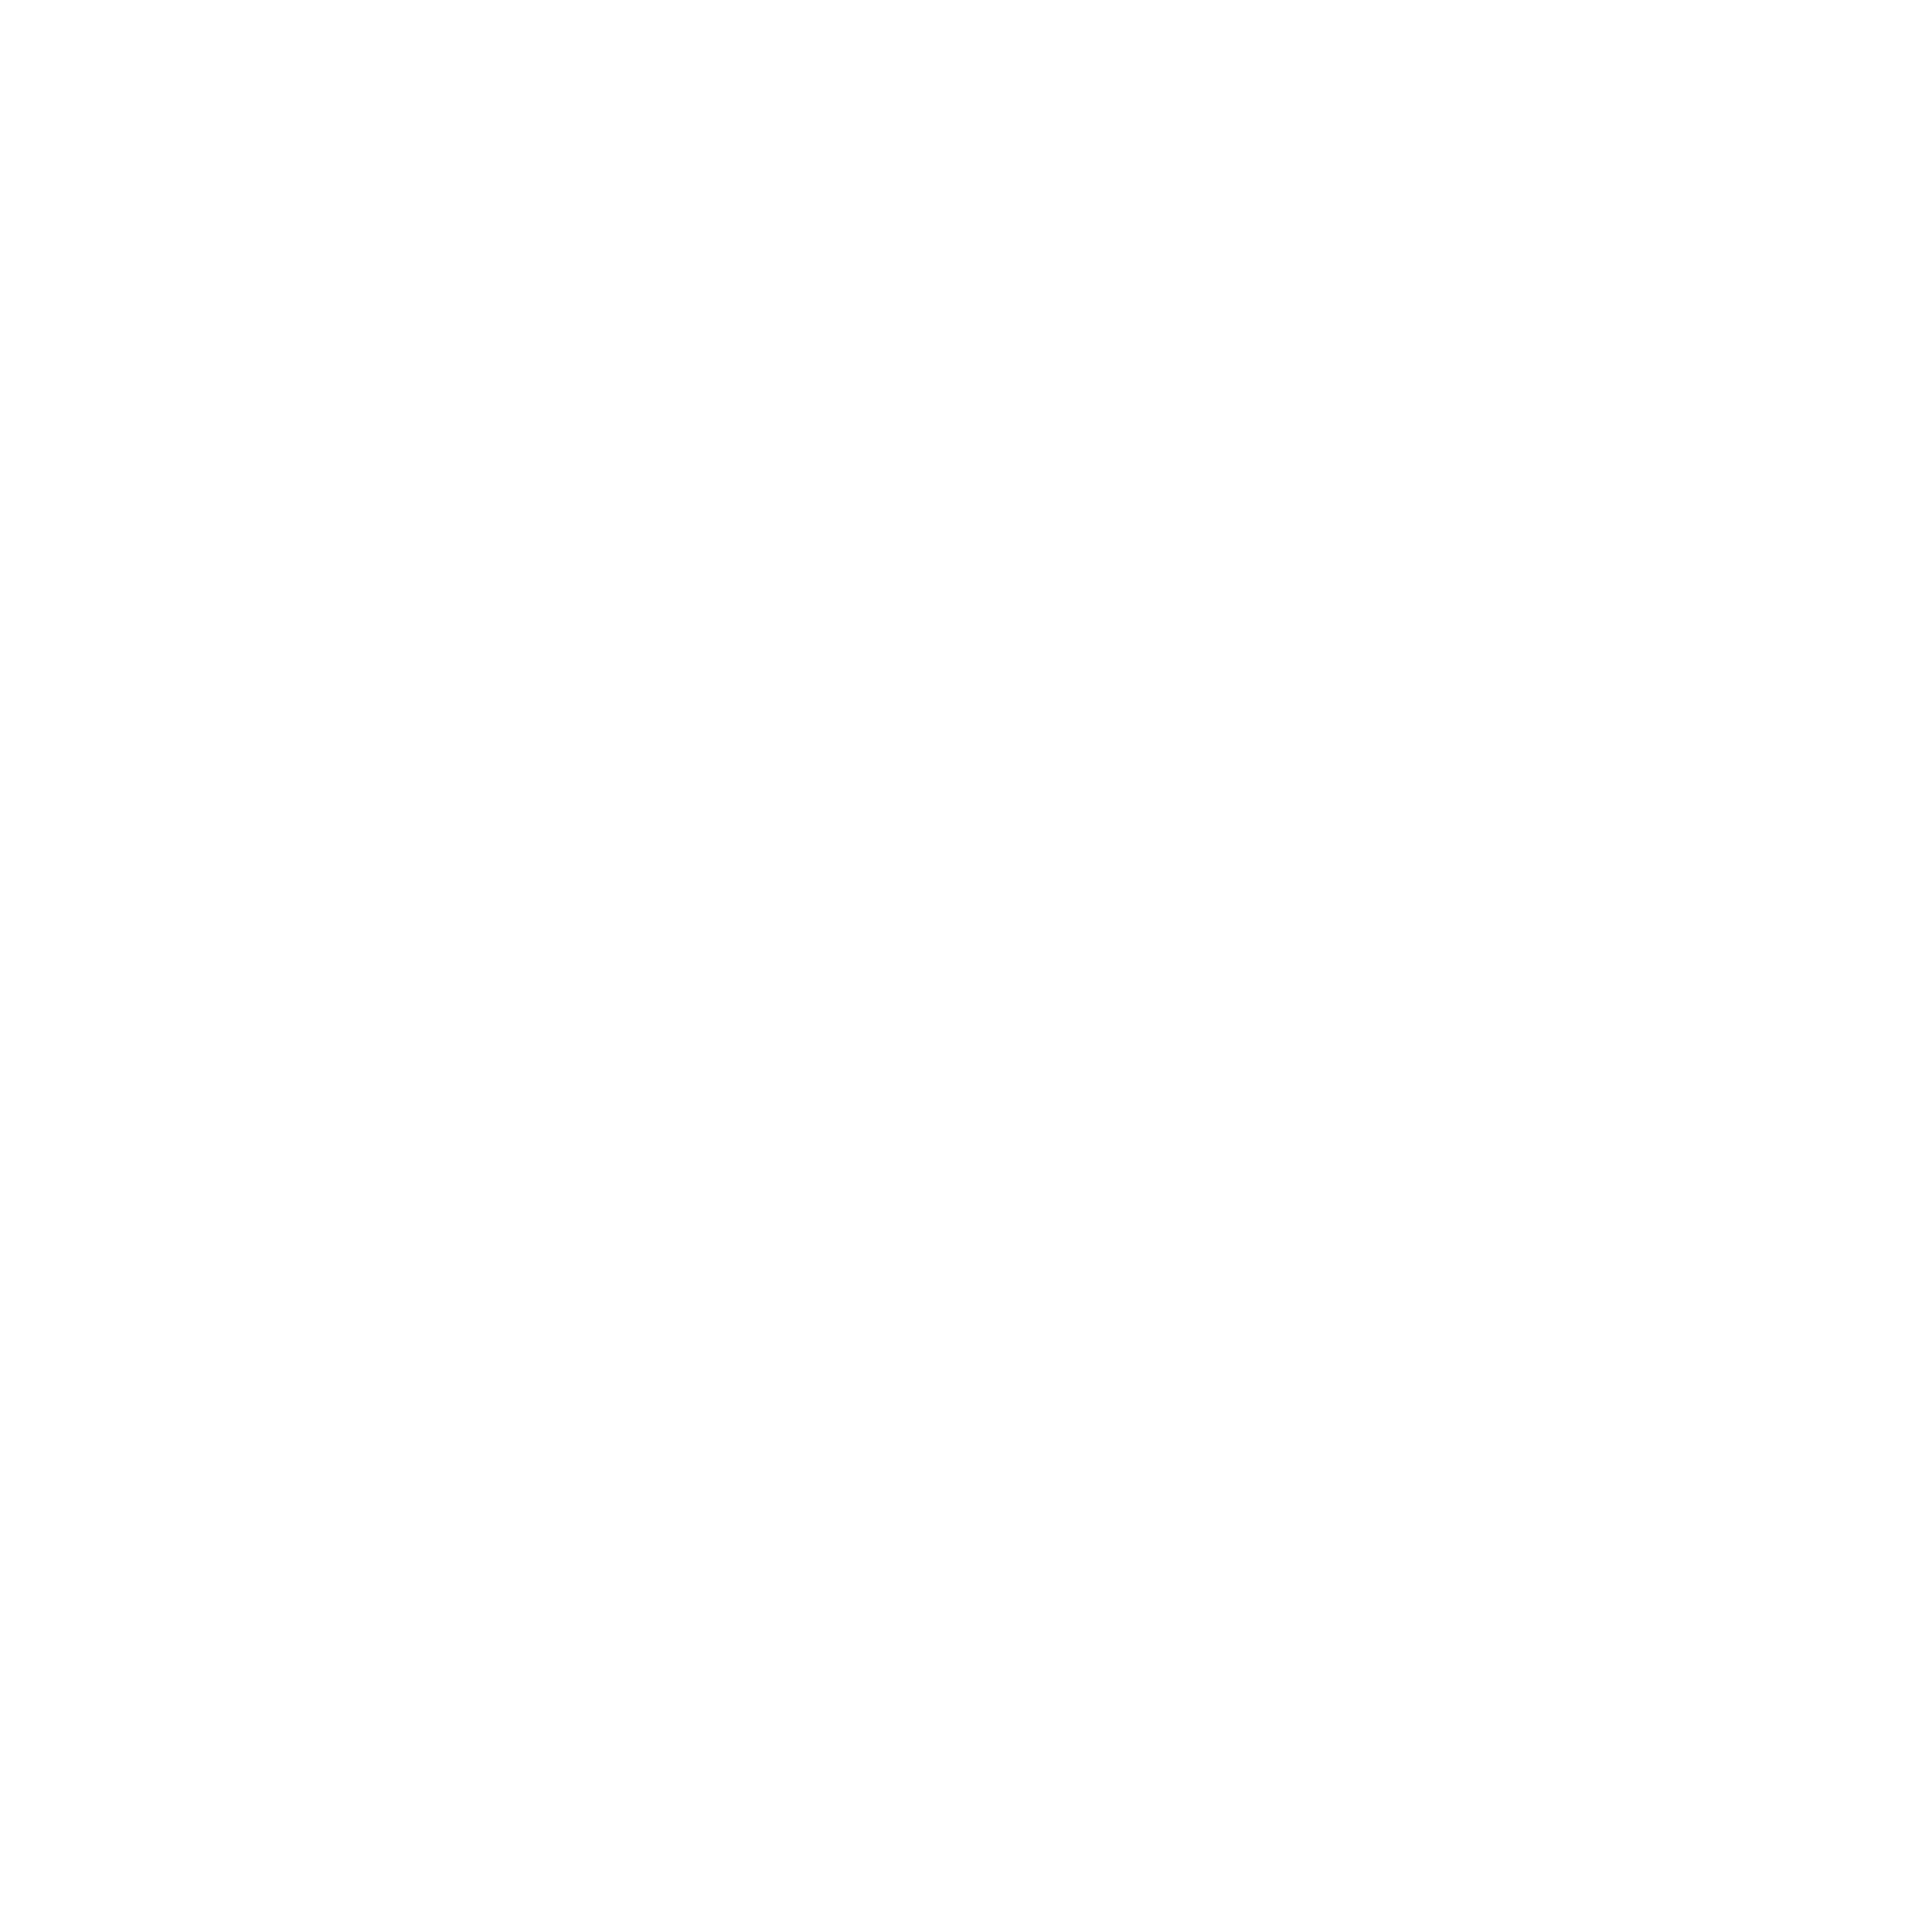 Saint Georges IV Logo